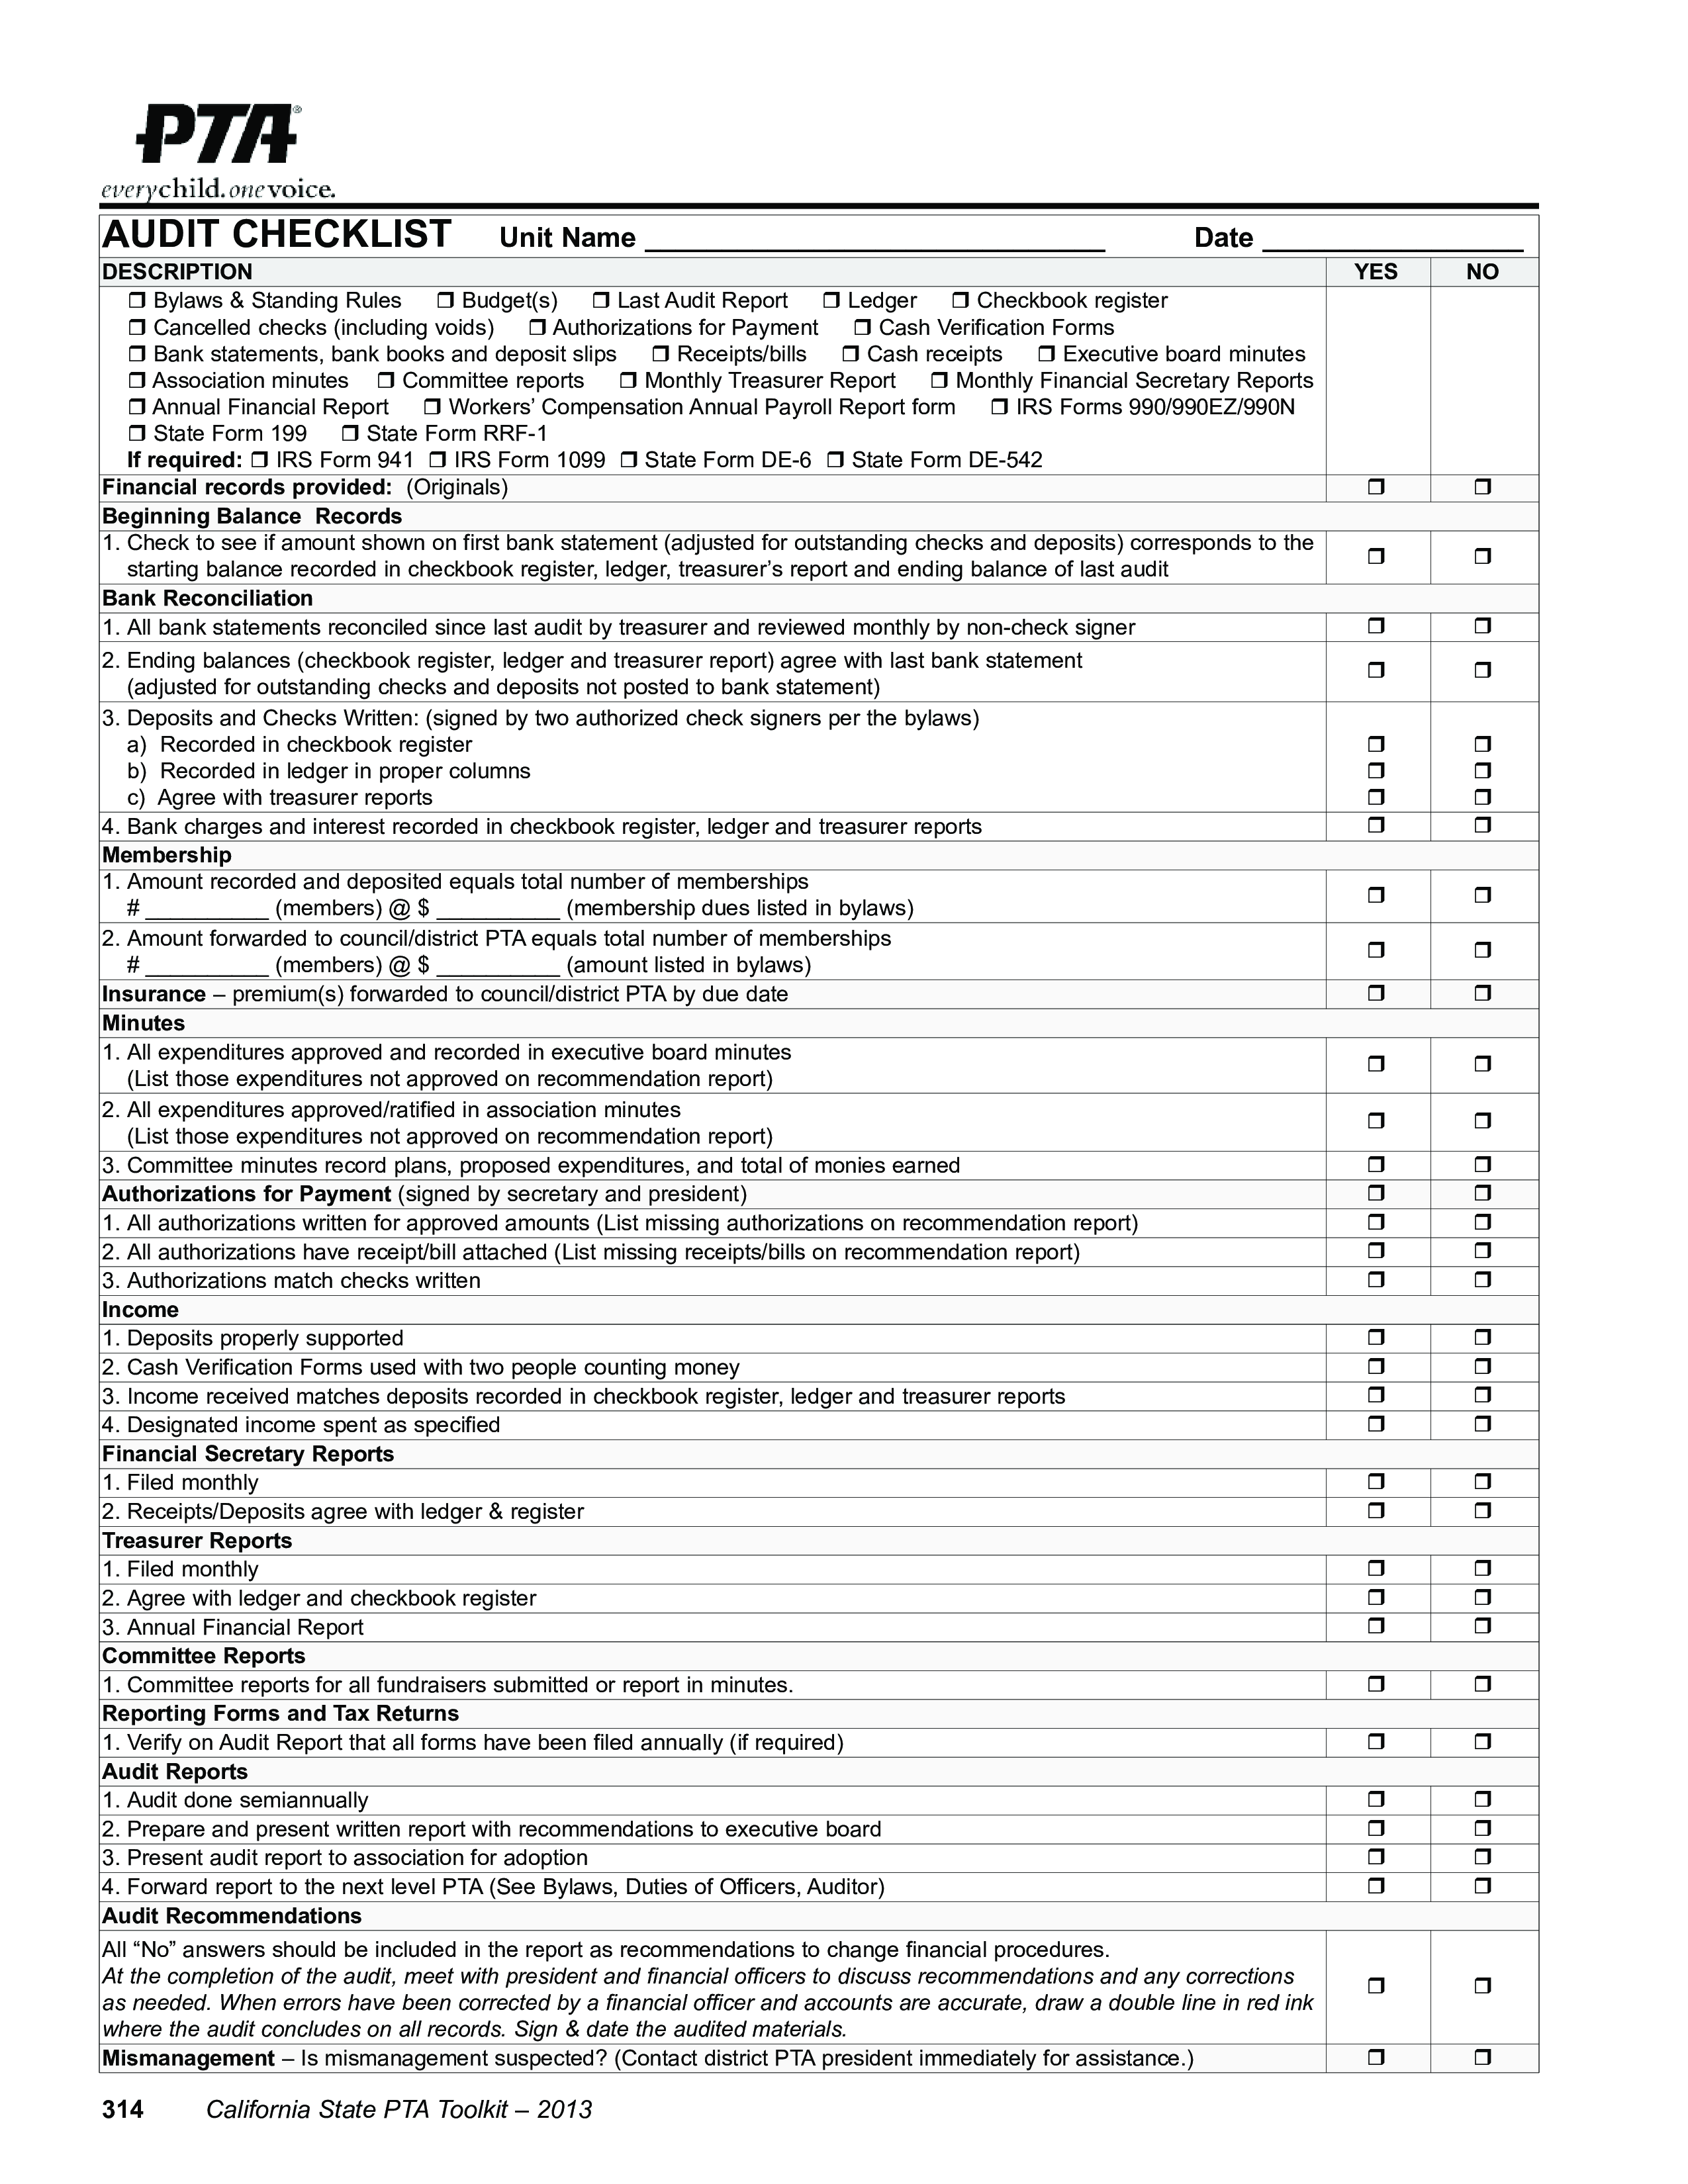 Audit Checklist sample main image